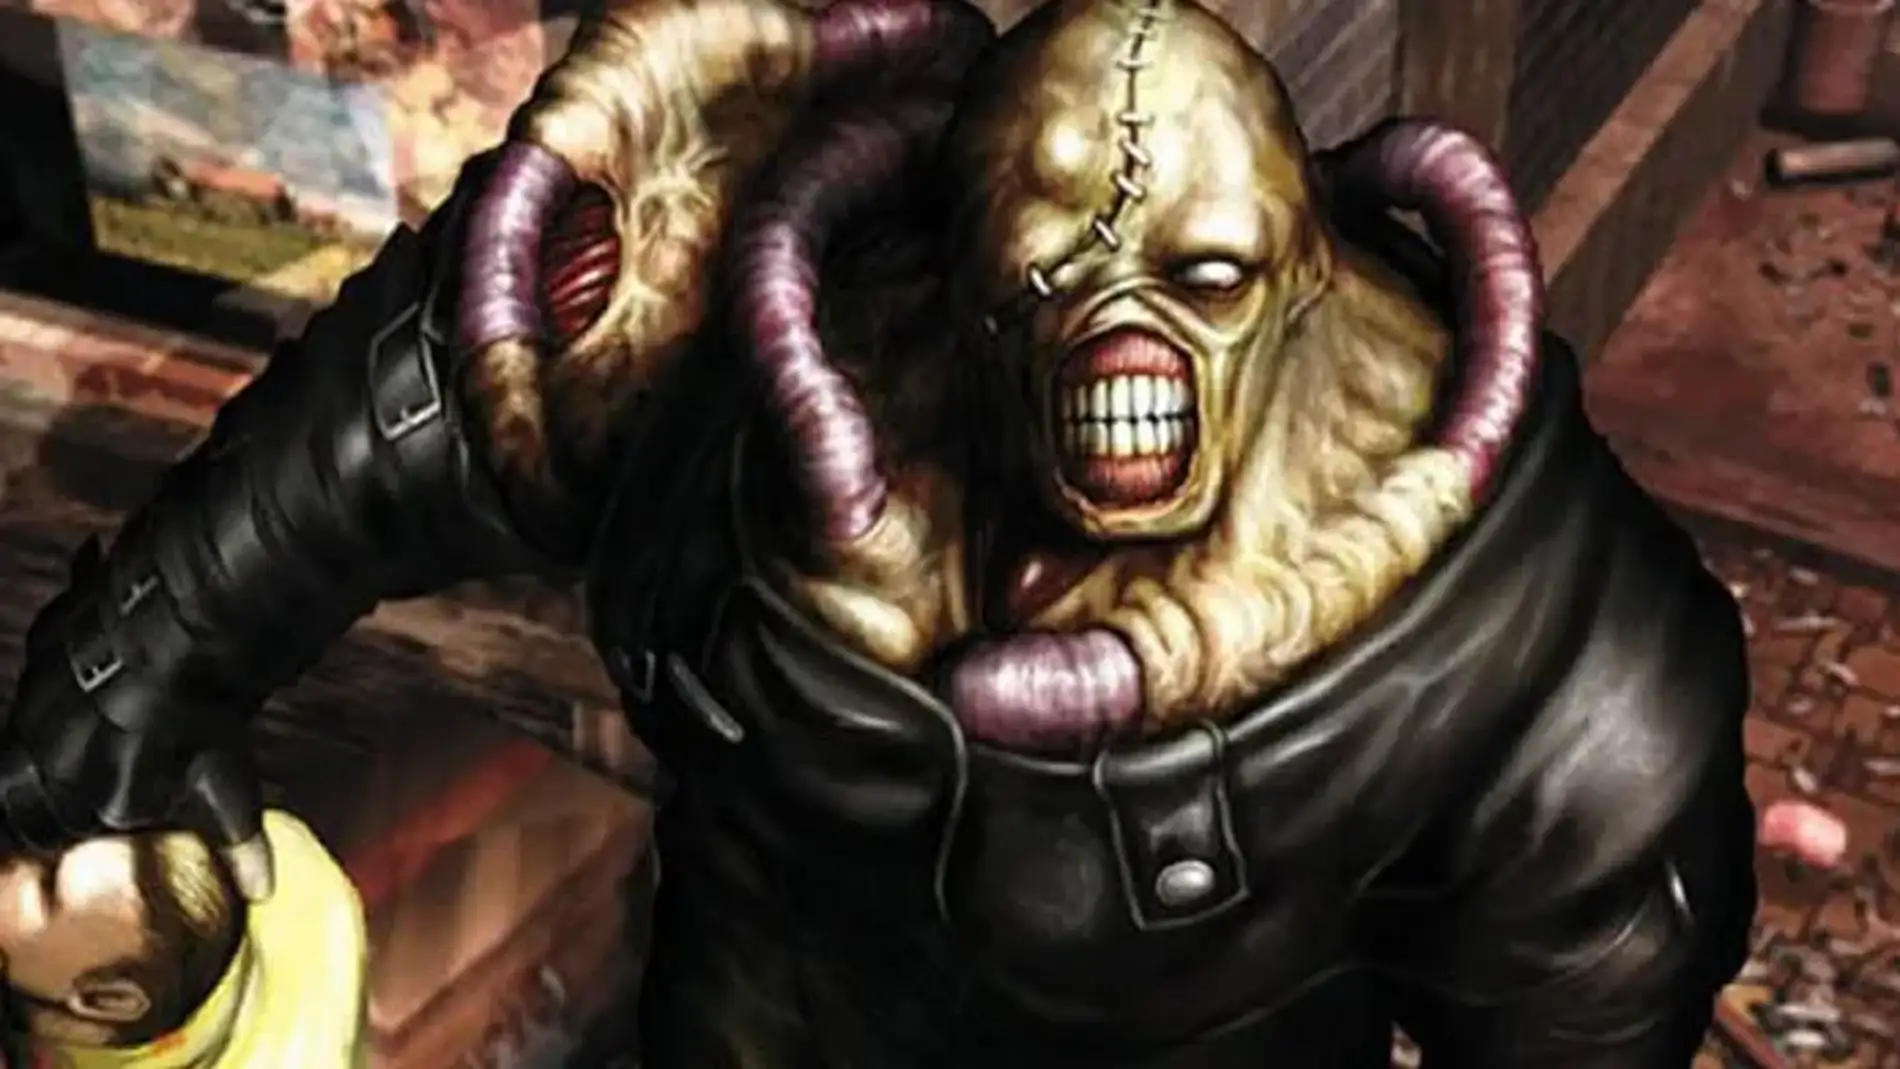 Figura Nemesis Resident Evil